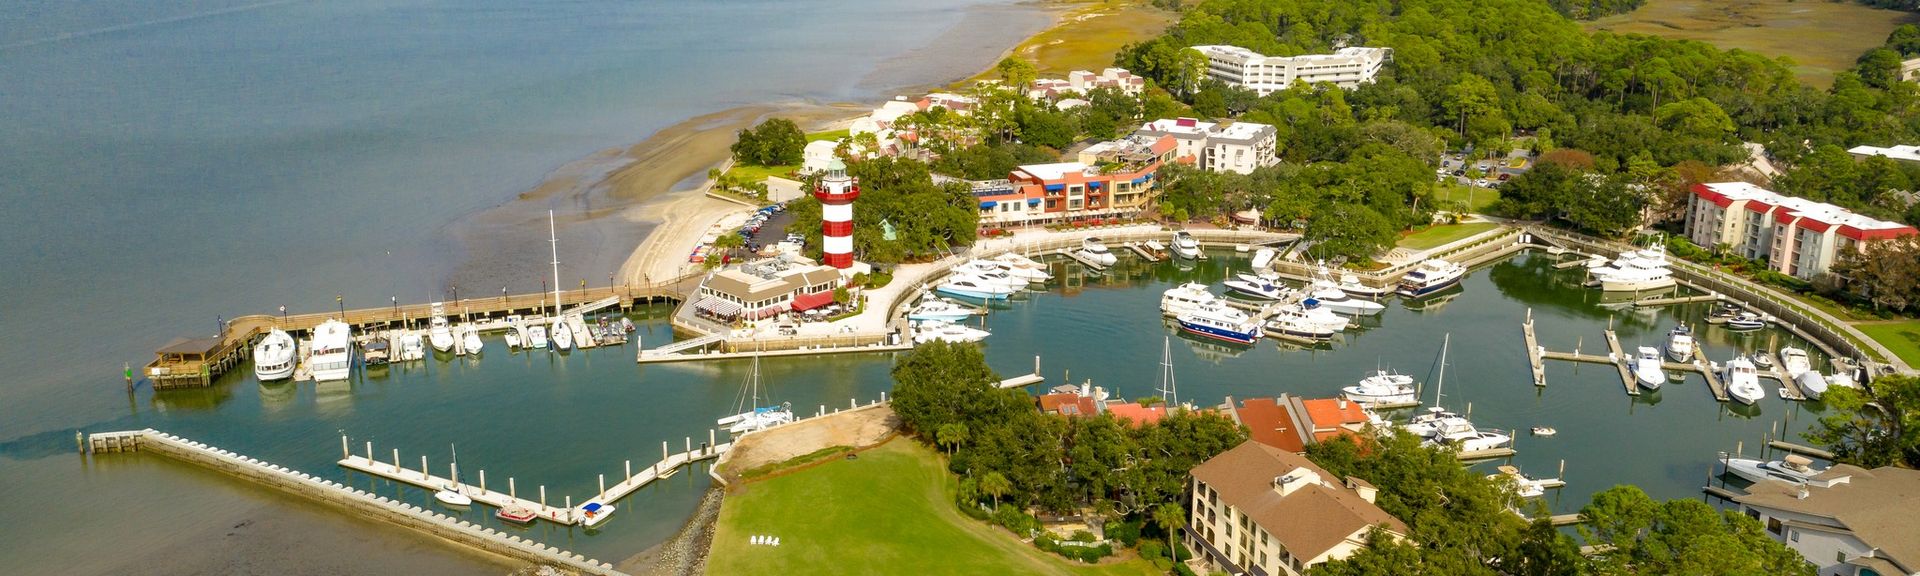 South Beach Club, Hilton Head Island Vacation Rentals: condo and